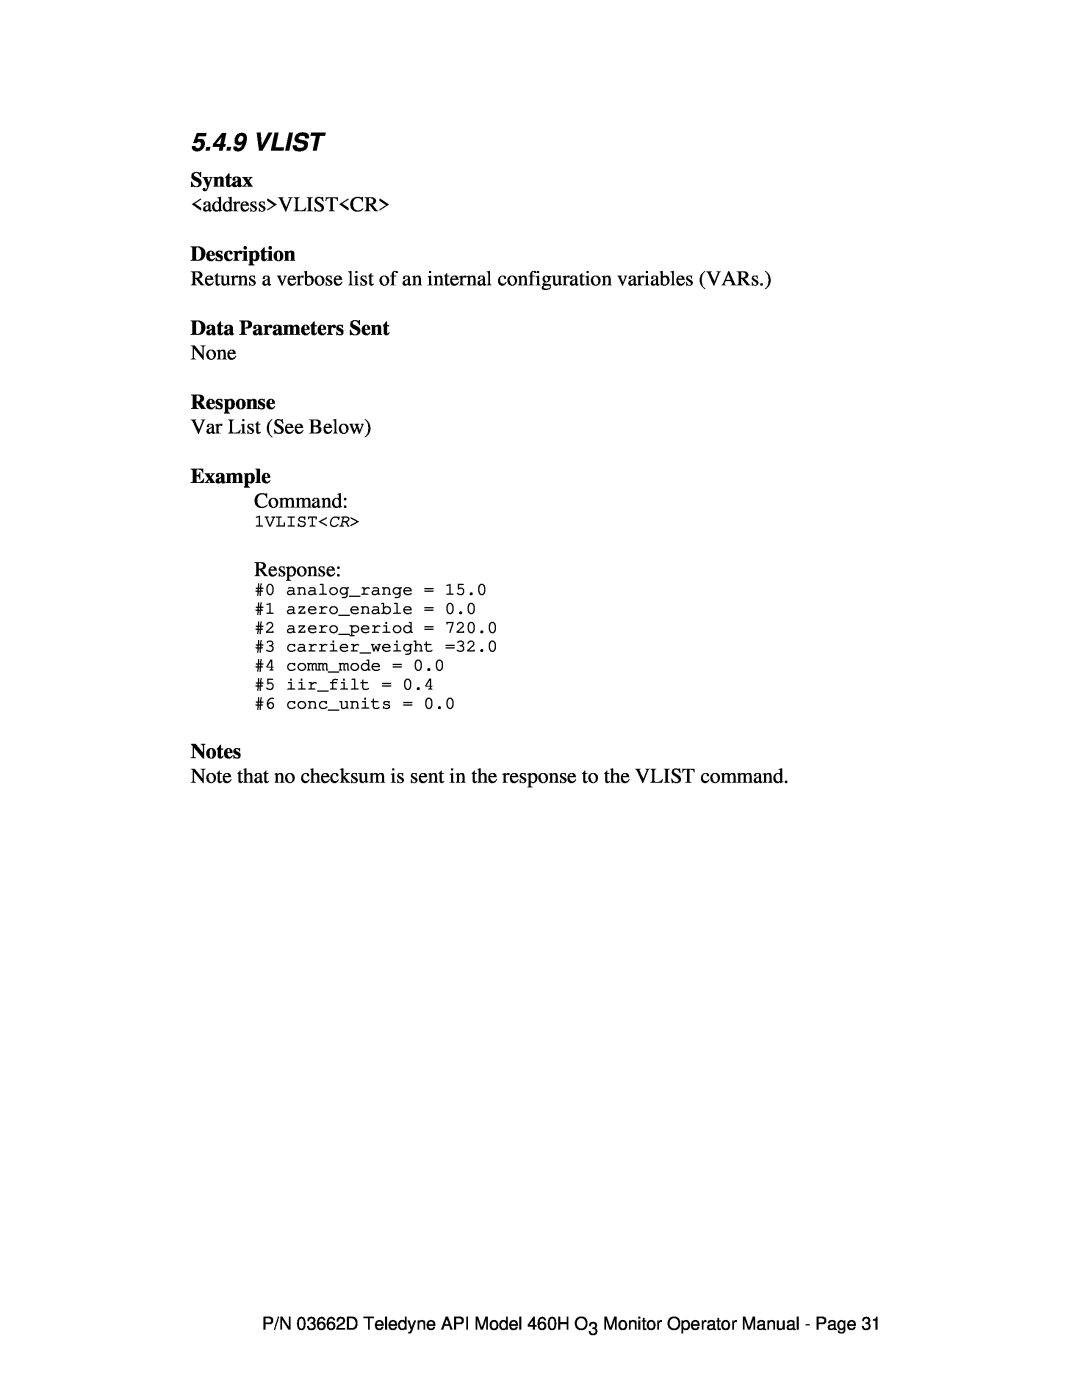 Teledyne 460H instruction manual Vlist, Syntax, Description, Data Parameters Sent, Response, Example, 1VLISTCR 